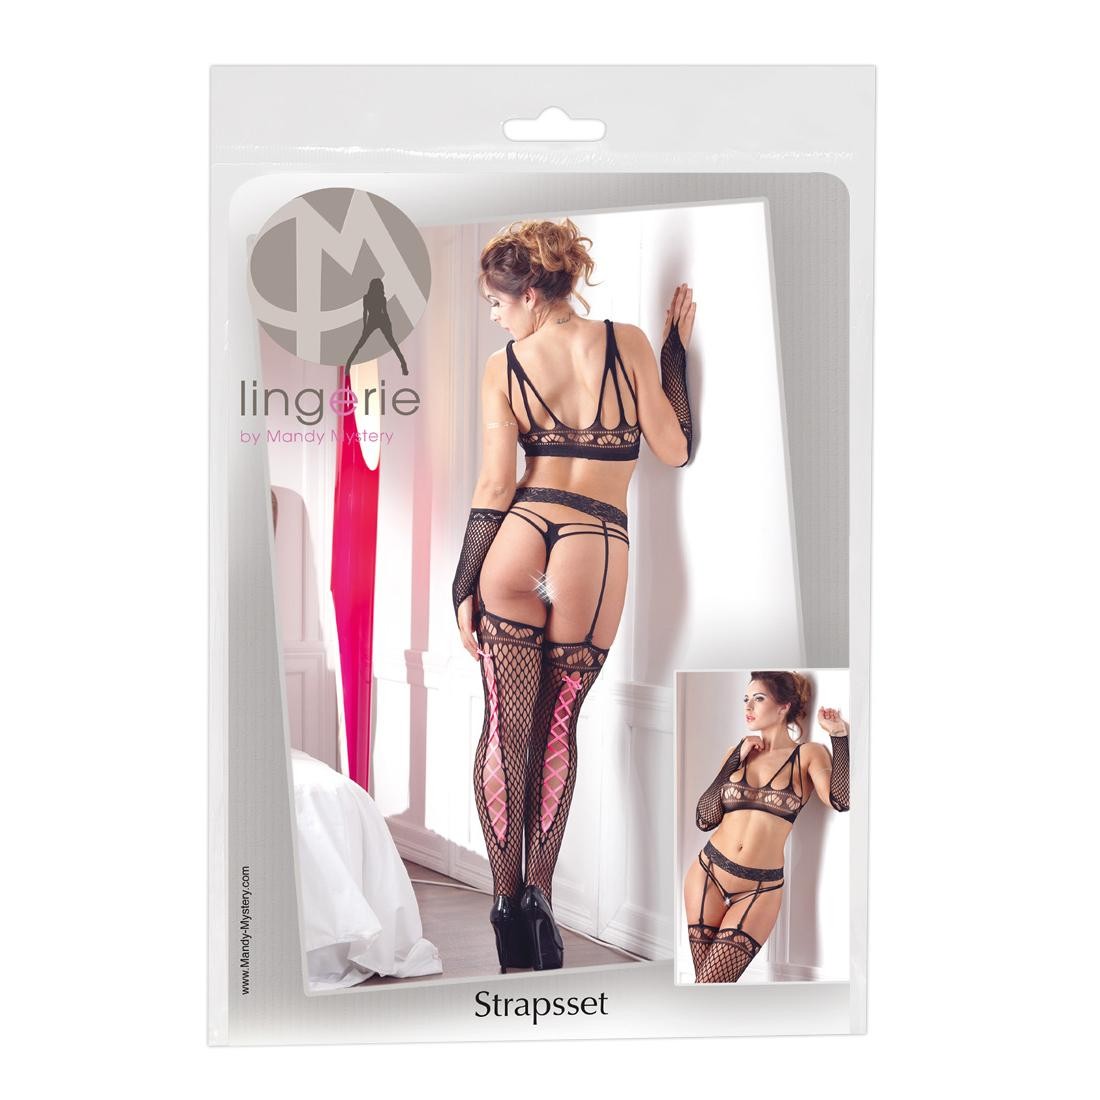  Mandy  Mystery  lingerie  -  Strapsset  schwarz/pink 